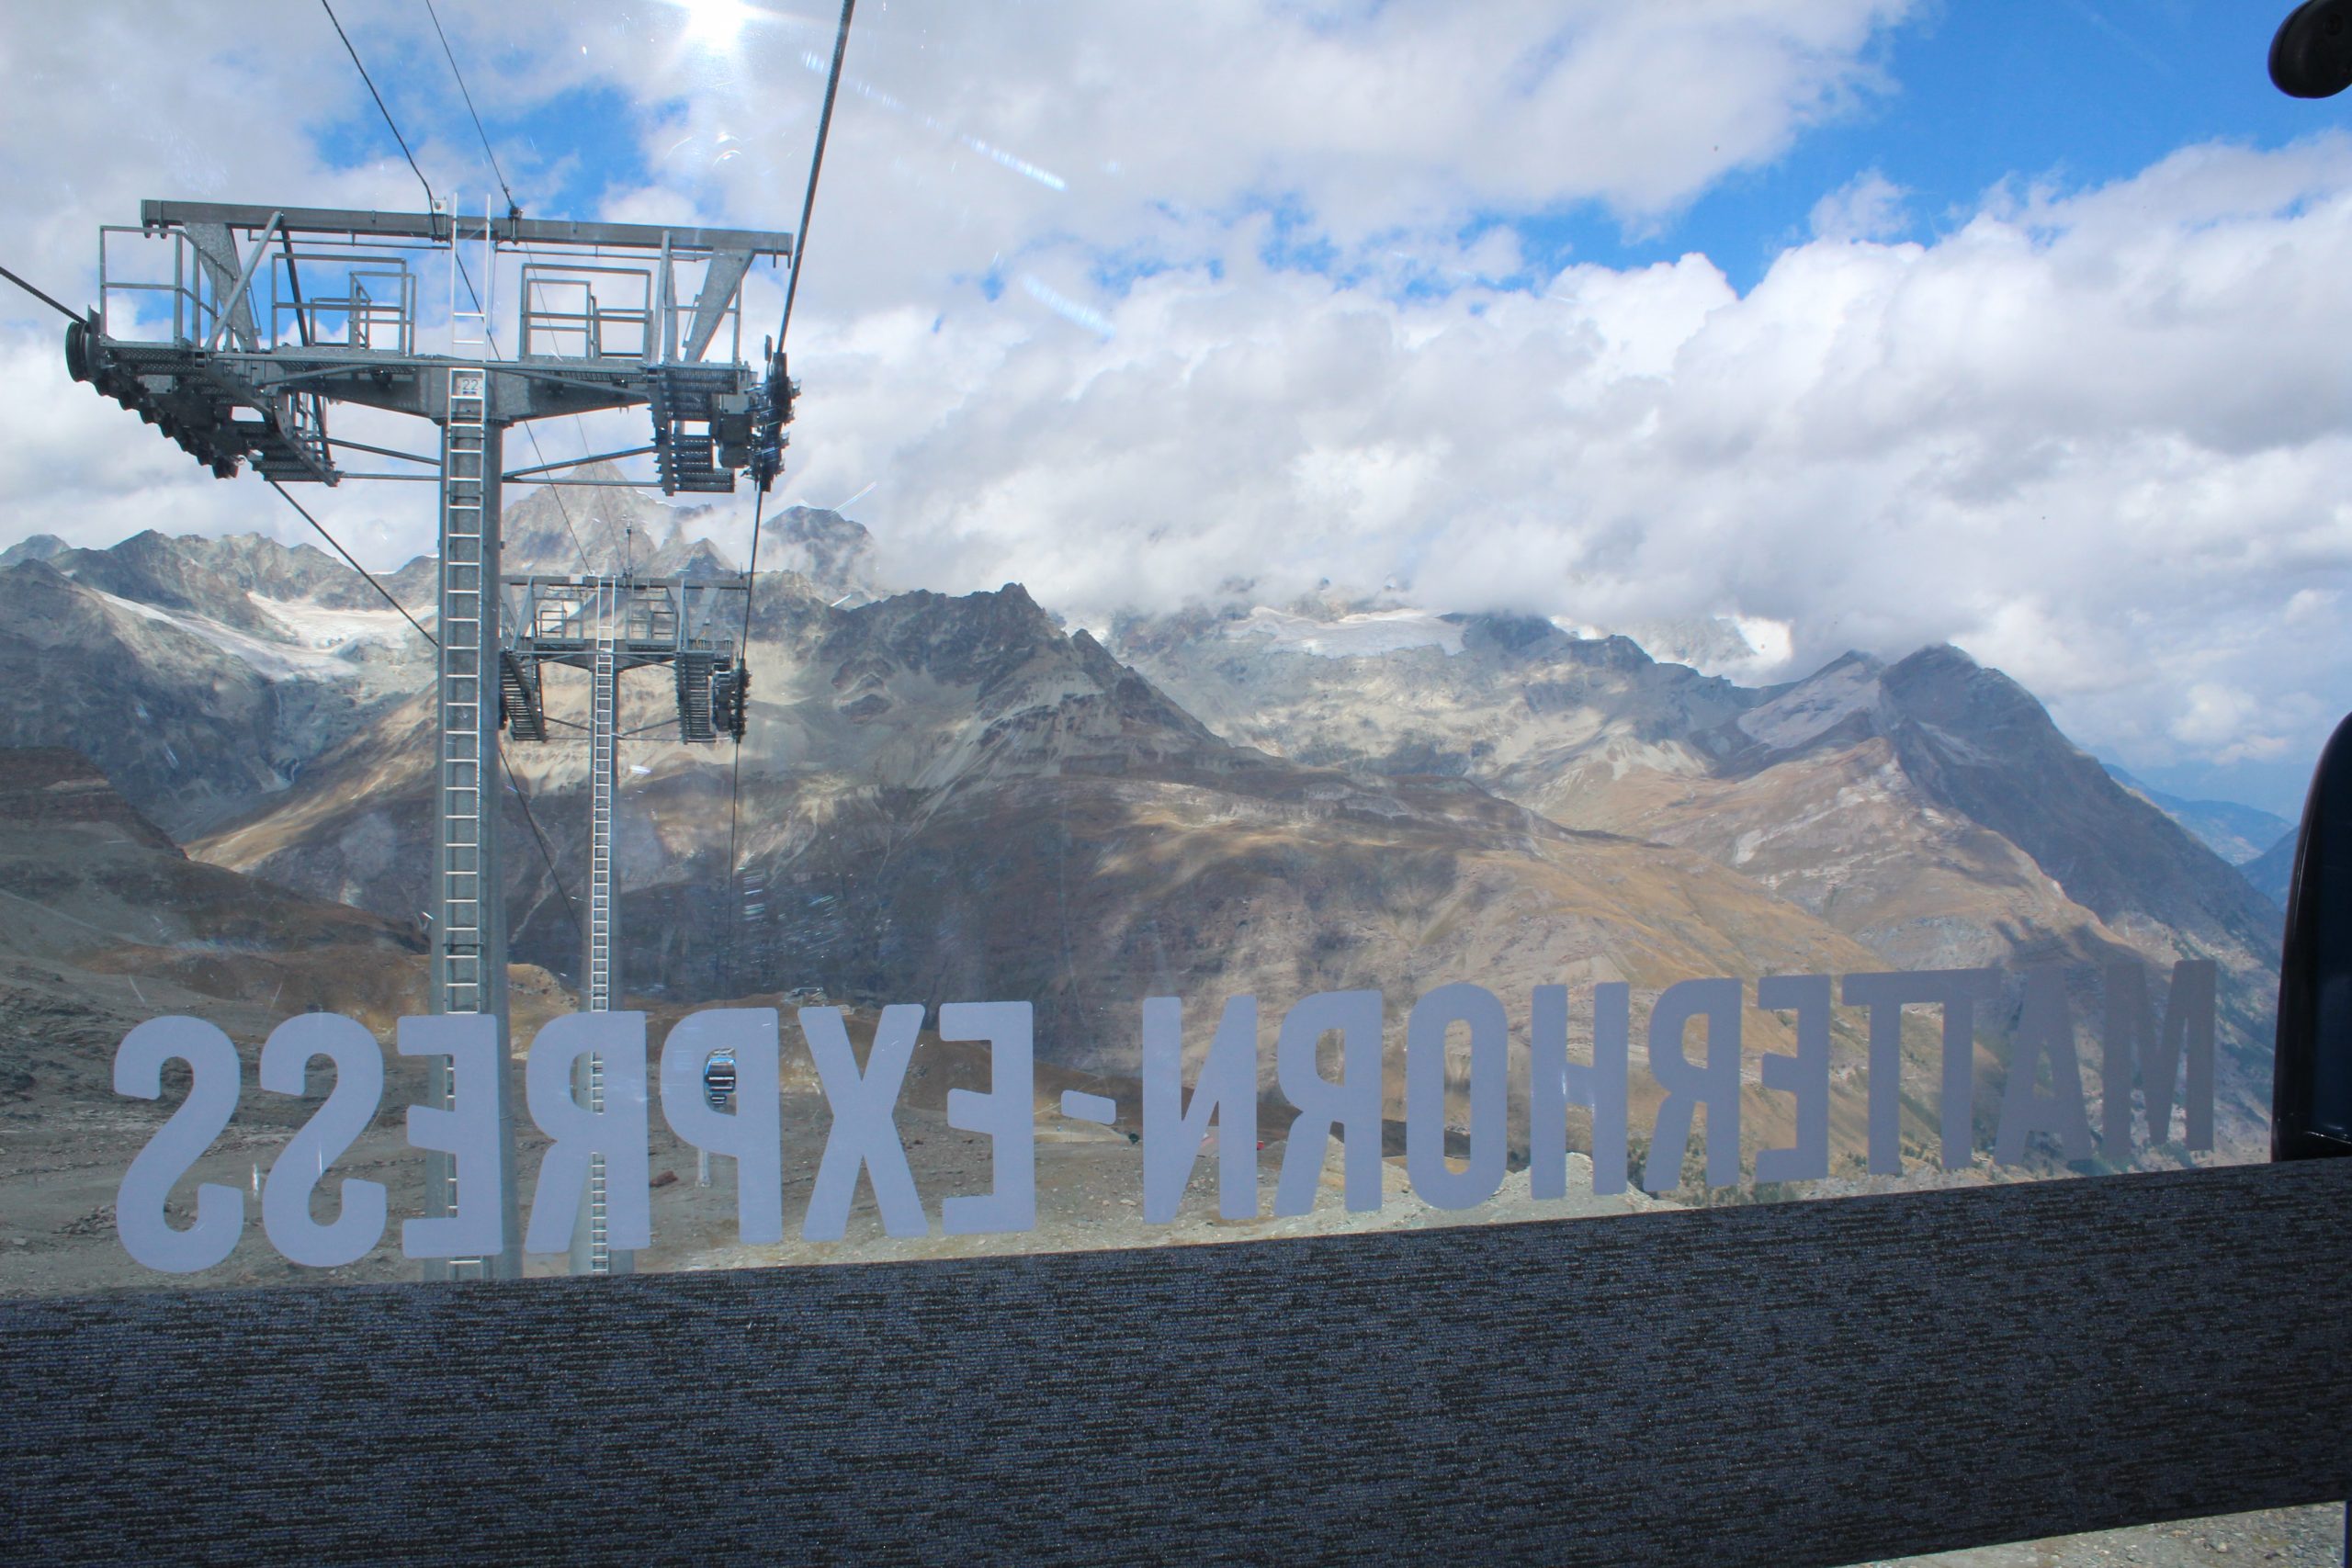 50 Jahre Hecklader Betriebsausflug Zermatt - Matterhorn Express